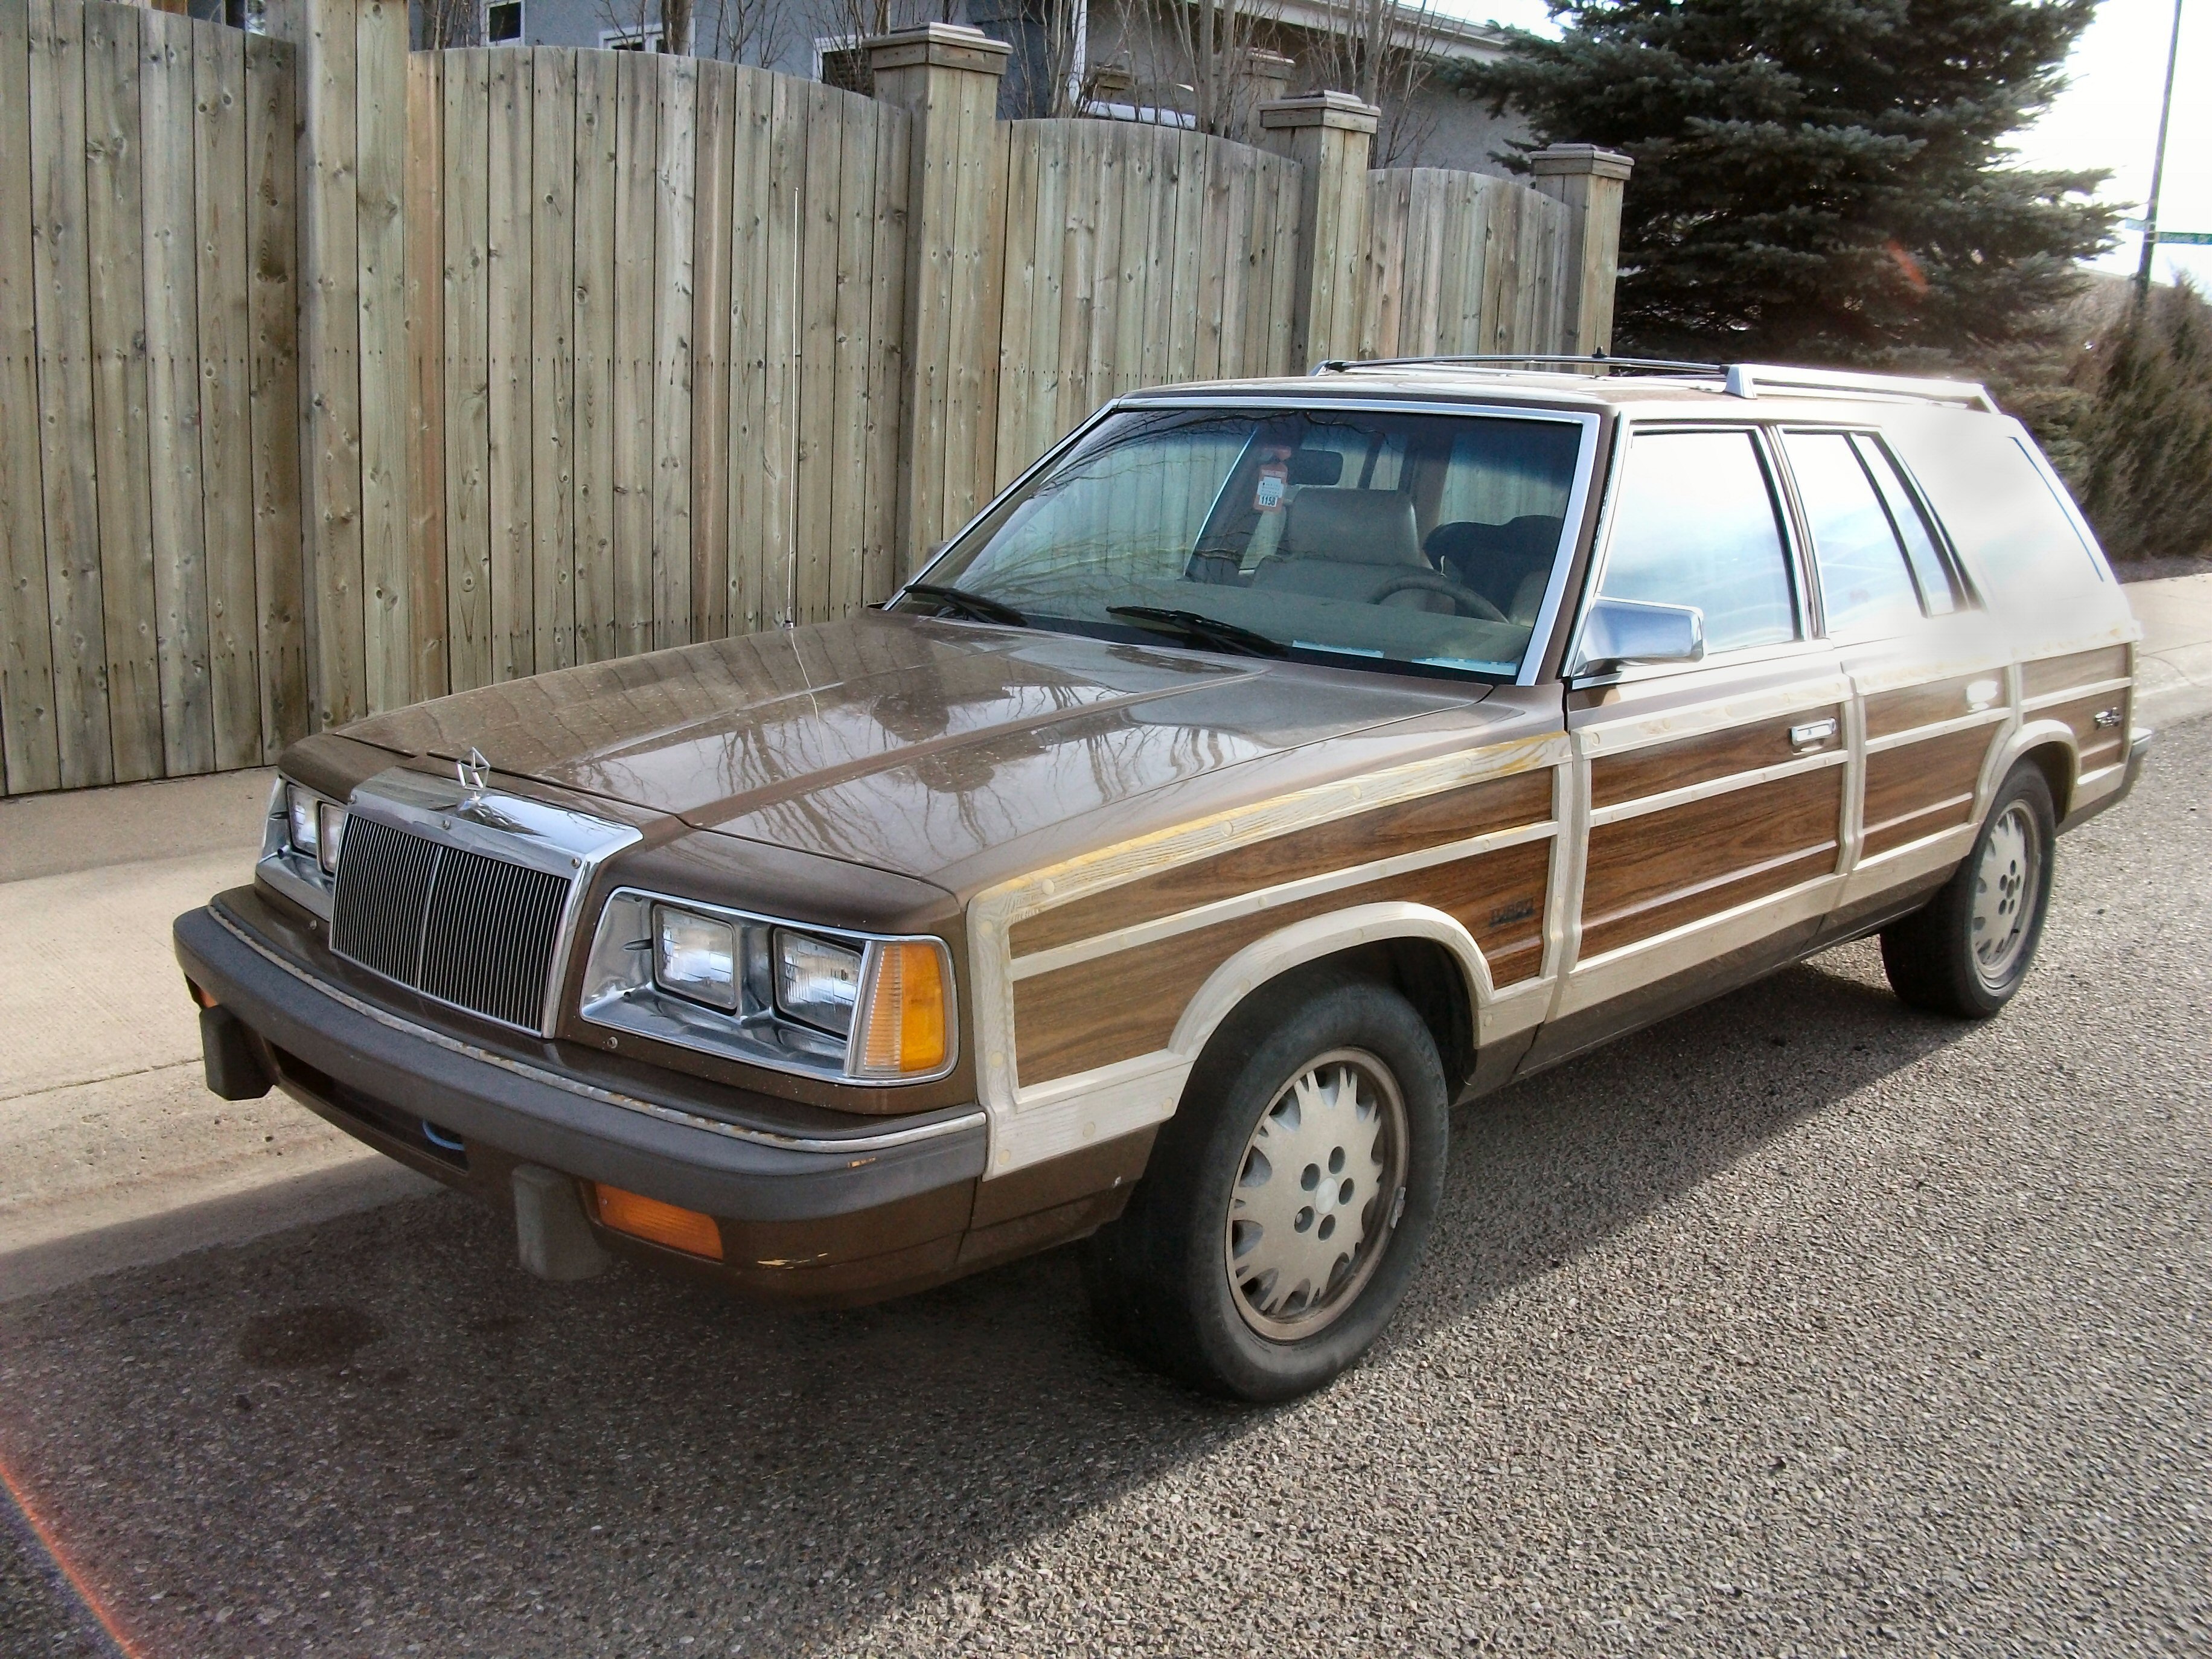 1986 Chrysler station wagon